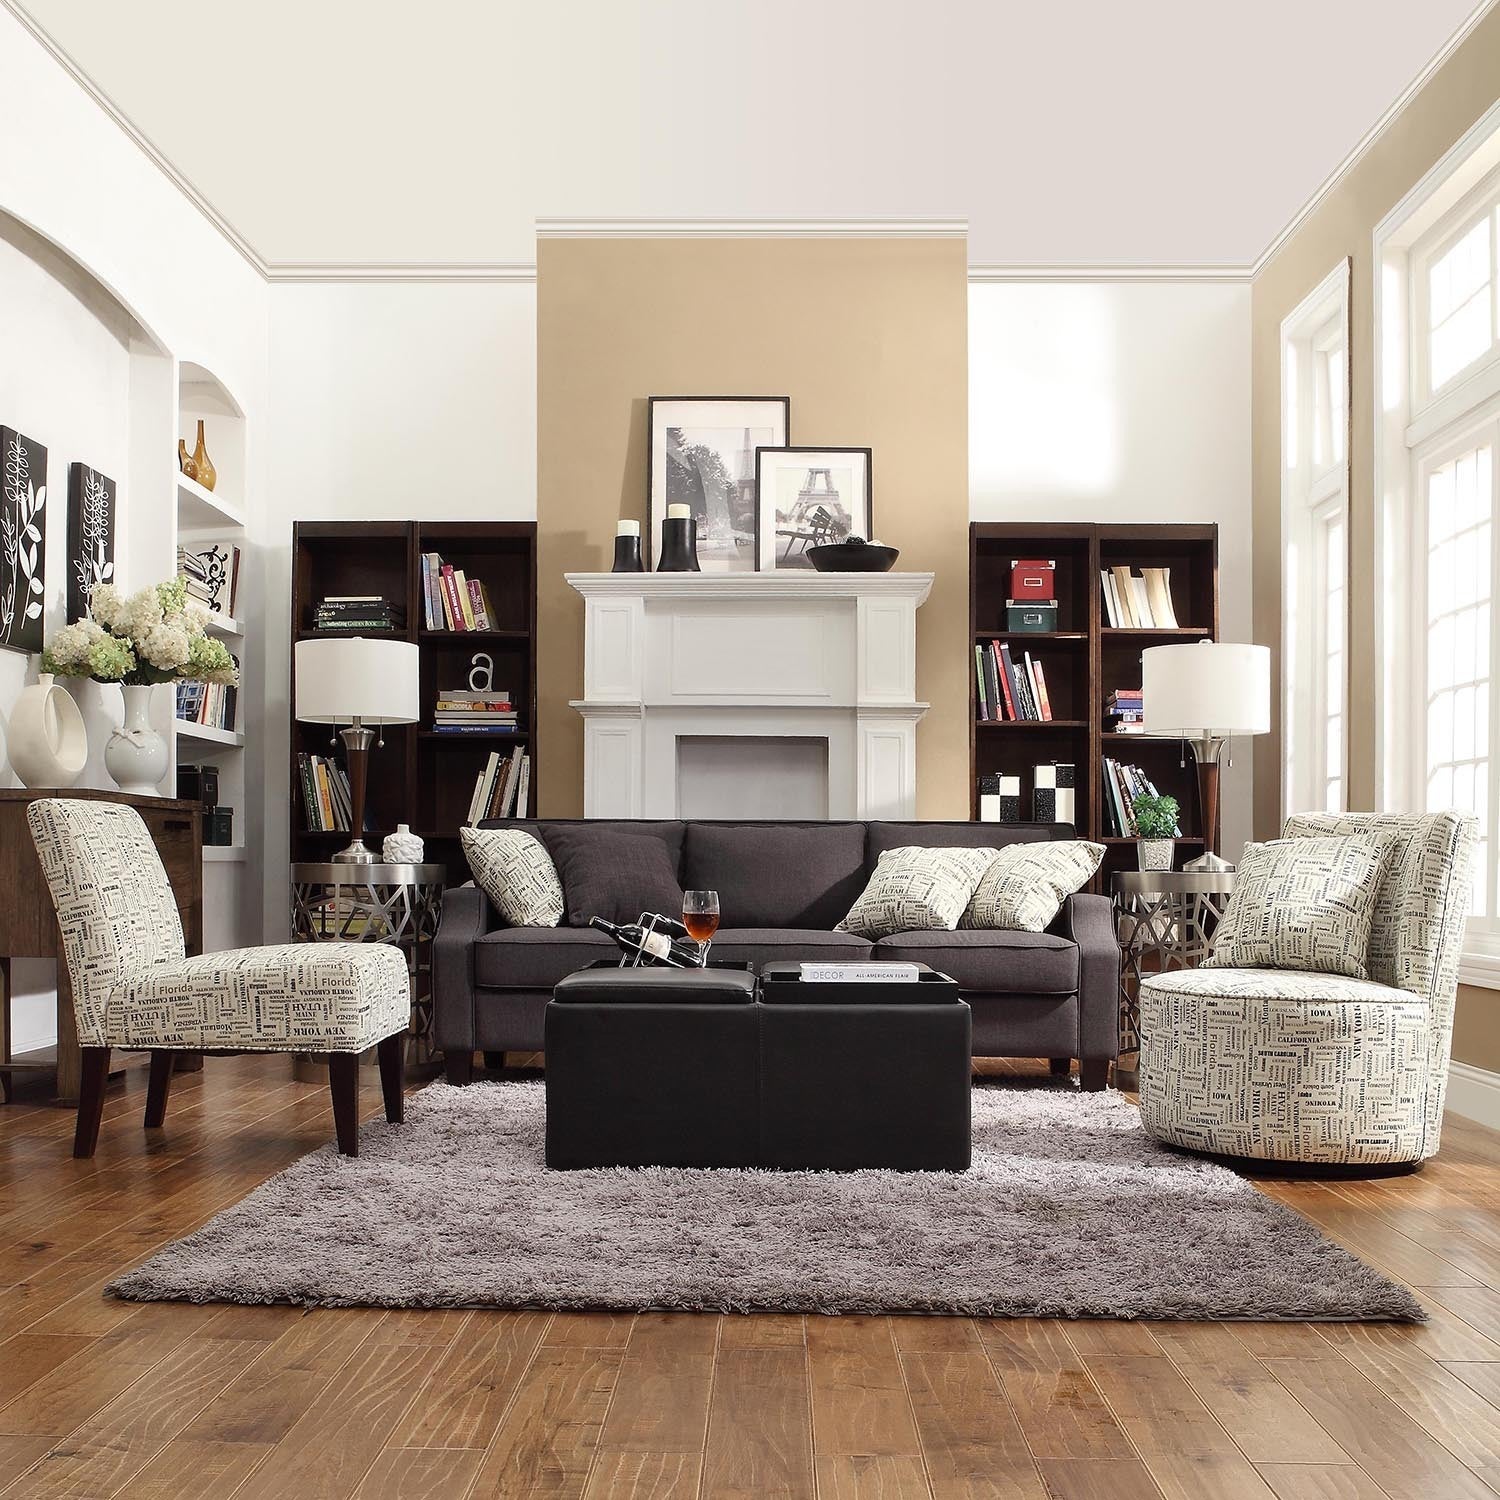 $234.00/Piece Kingbird Furniture Company Brand Divan Couch Supplier 9